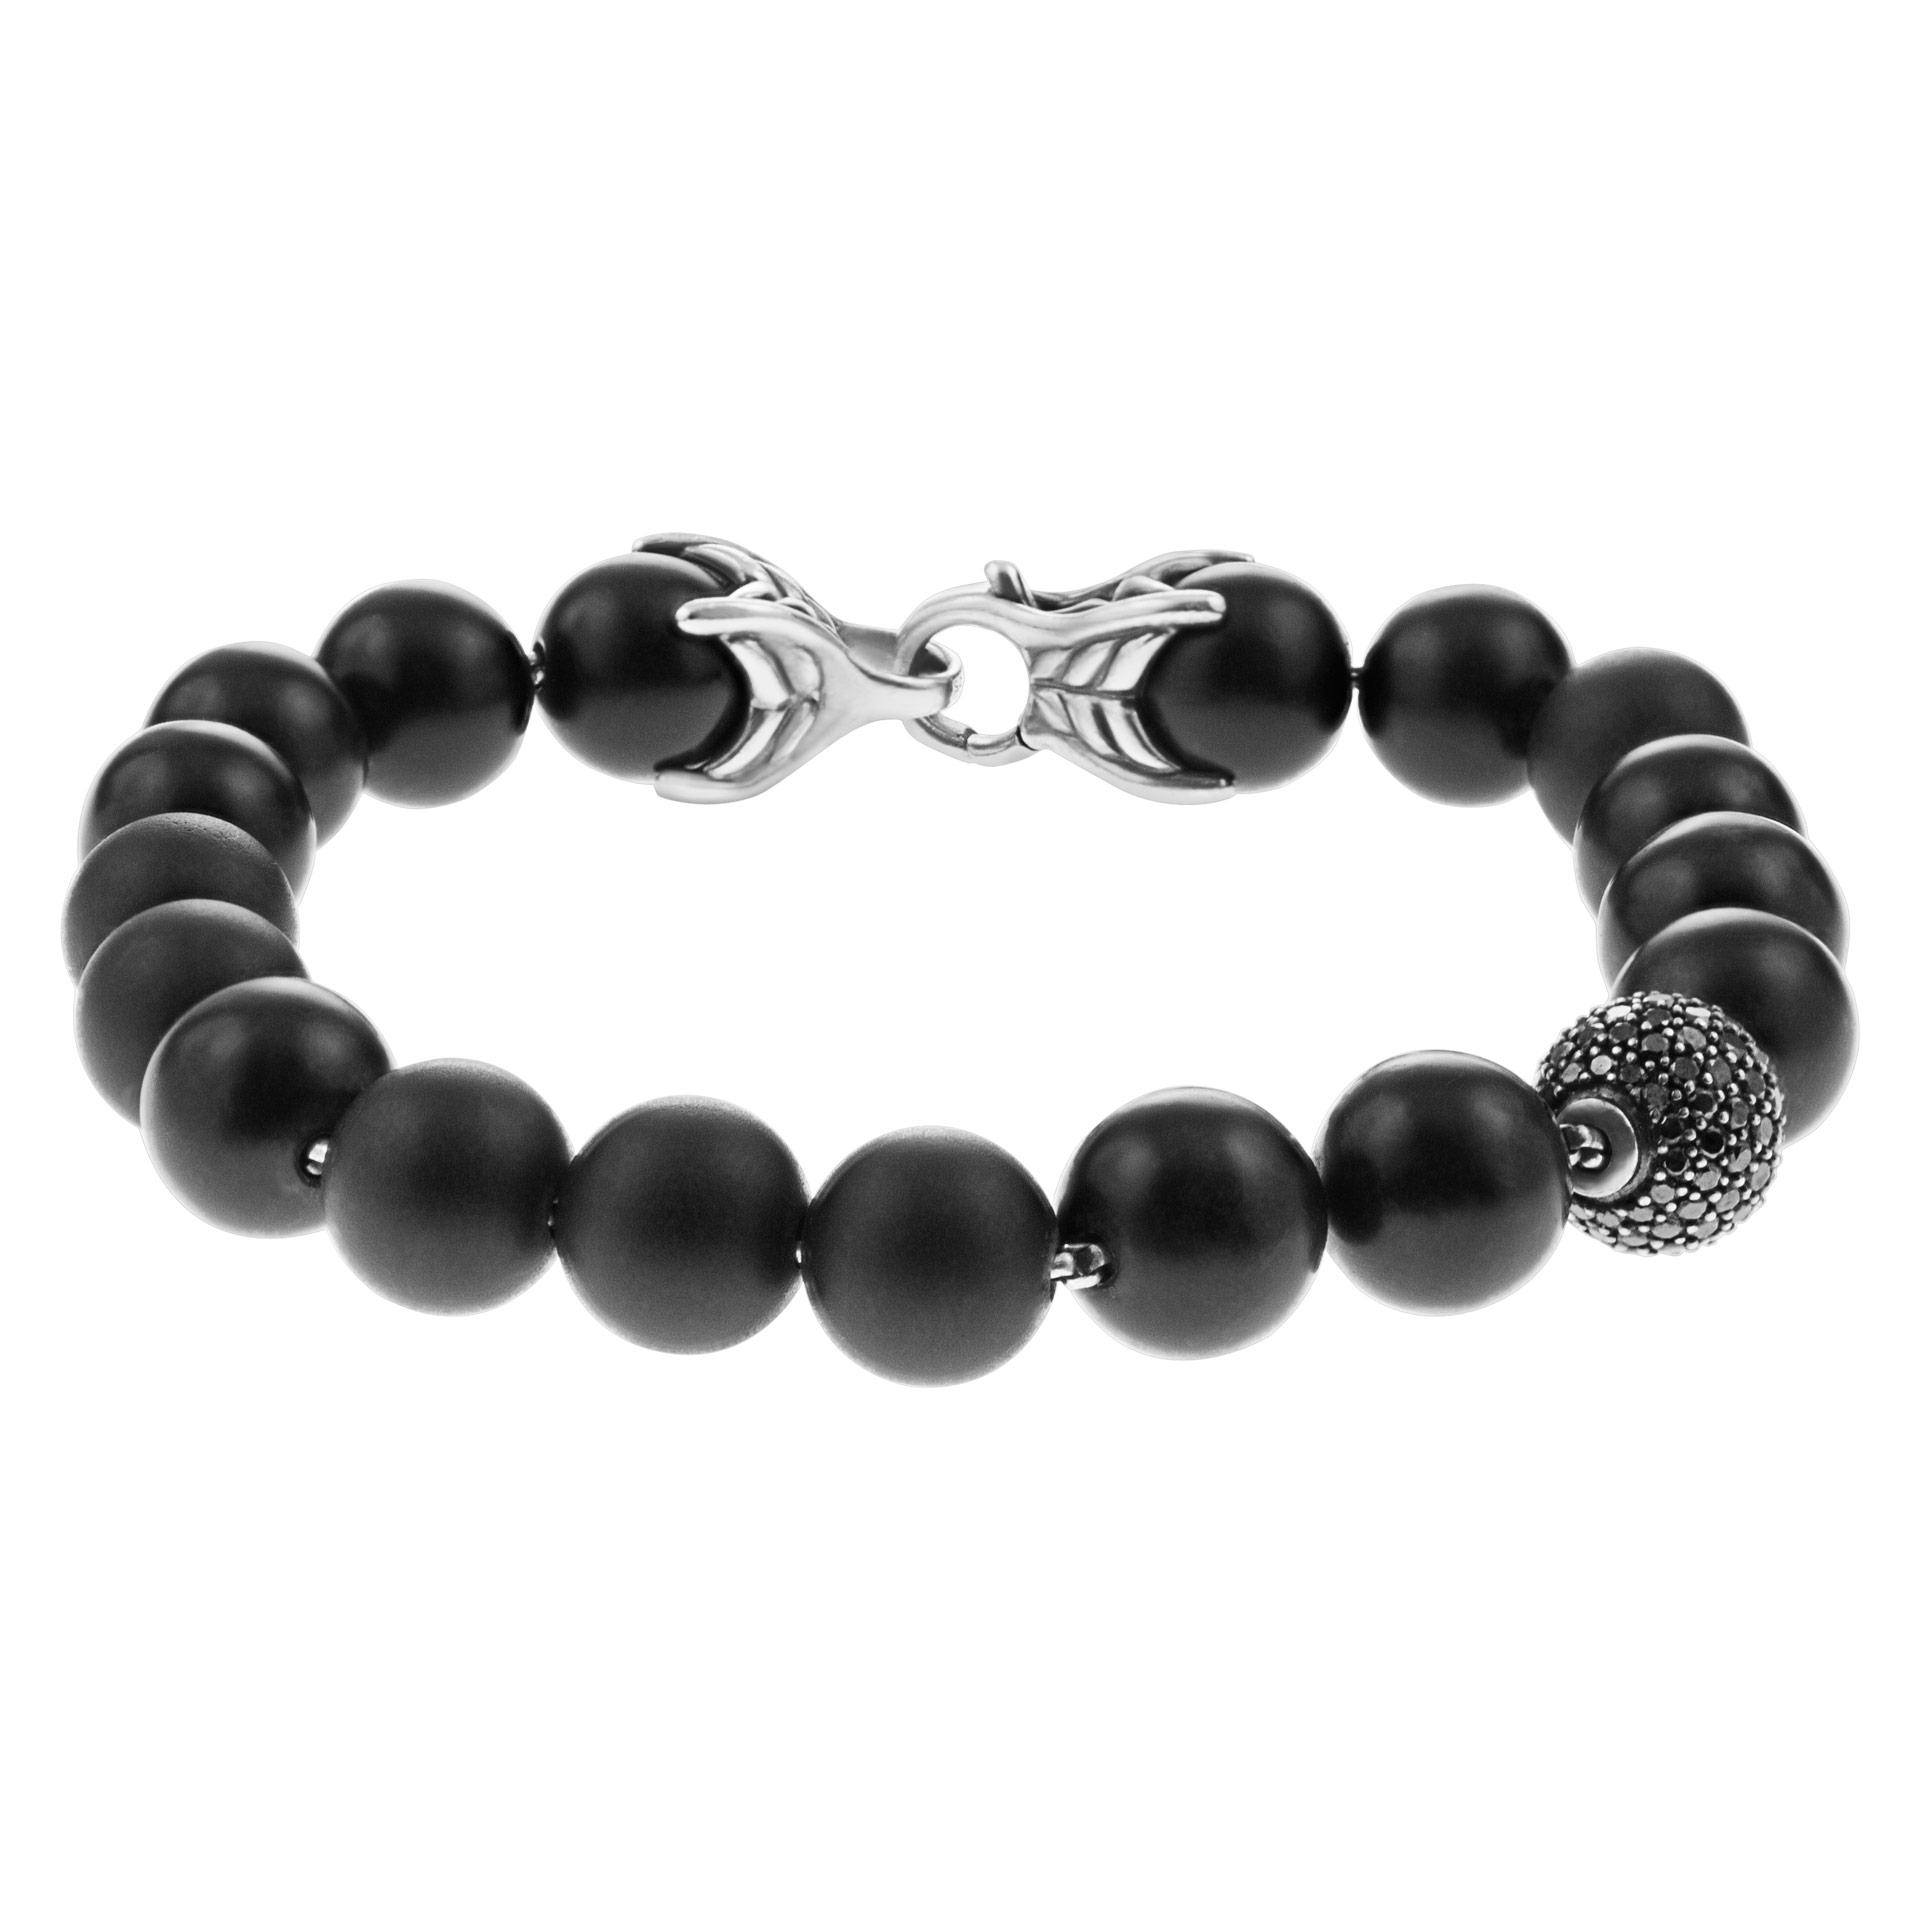 David Yurman spiritual beads bracelet